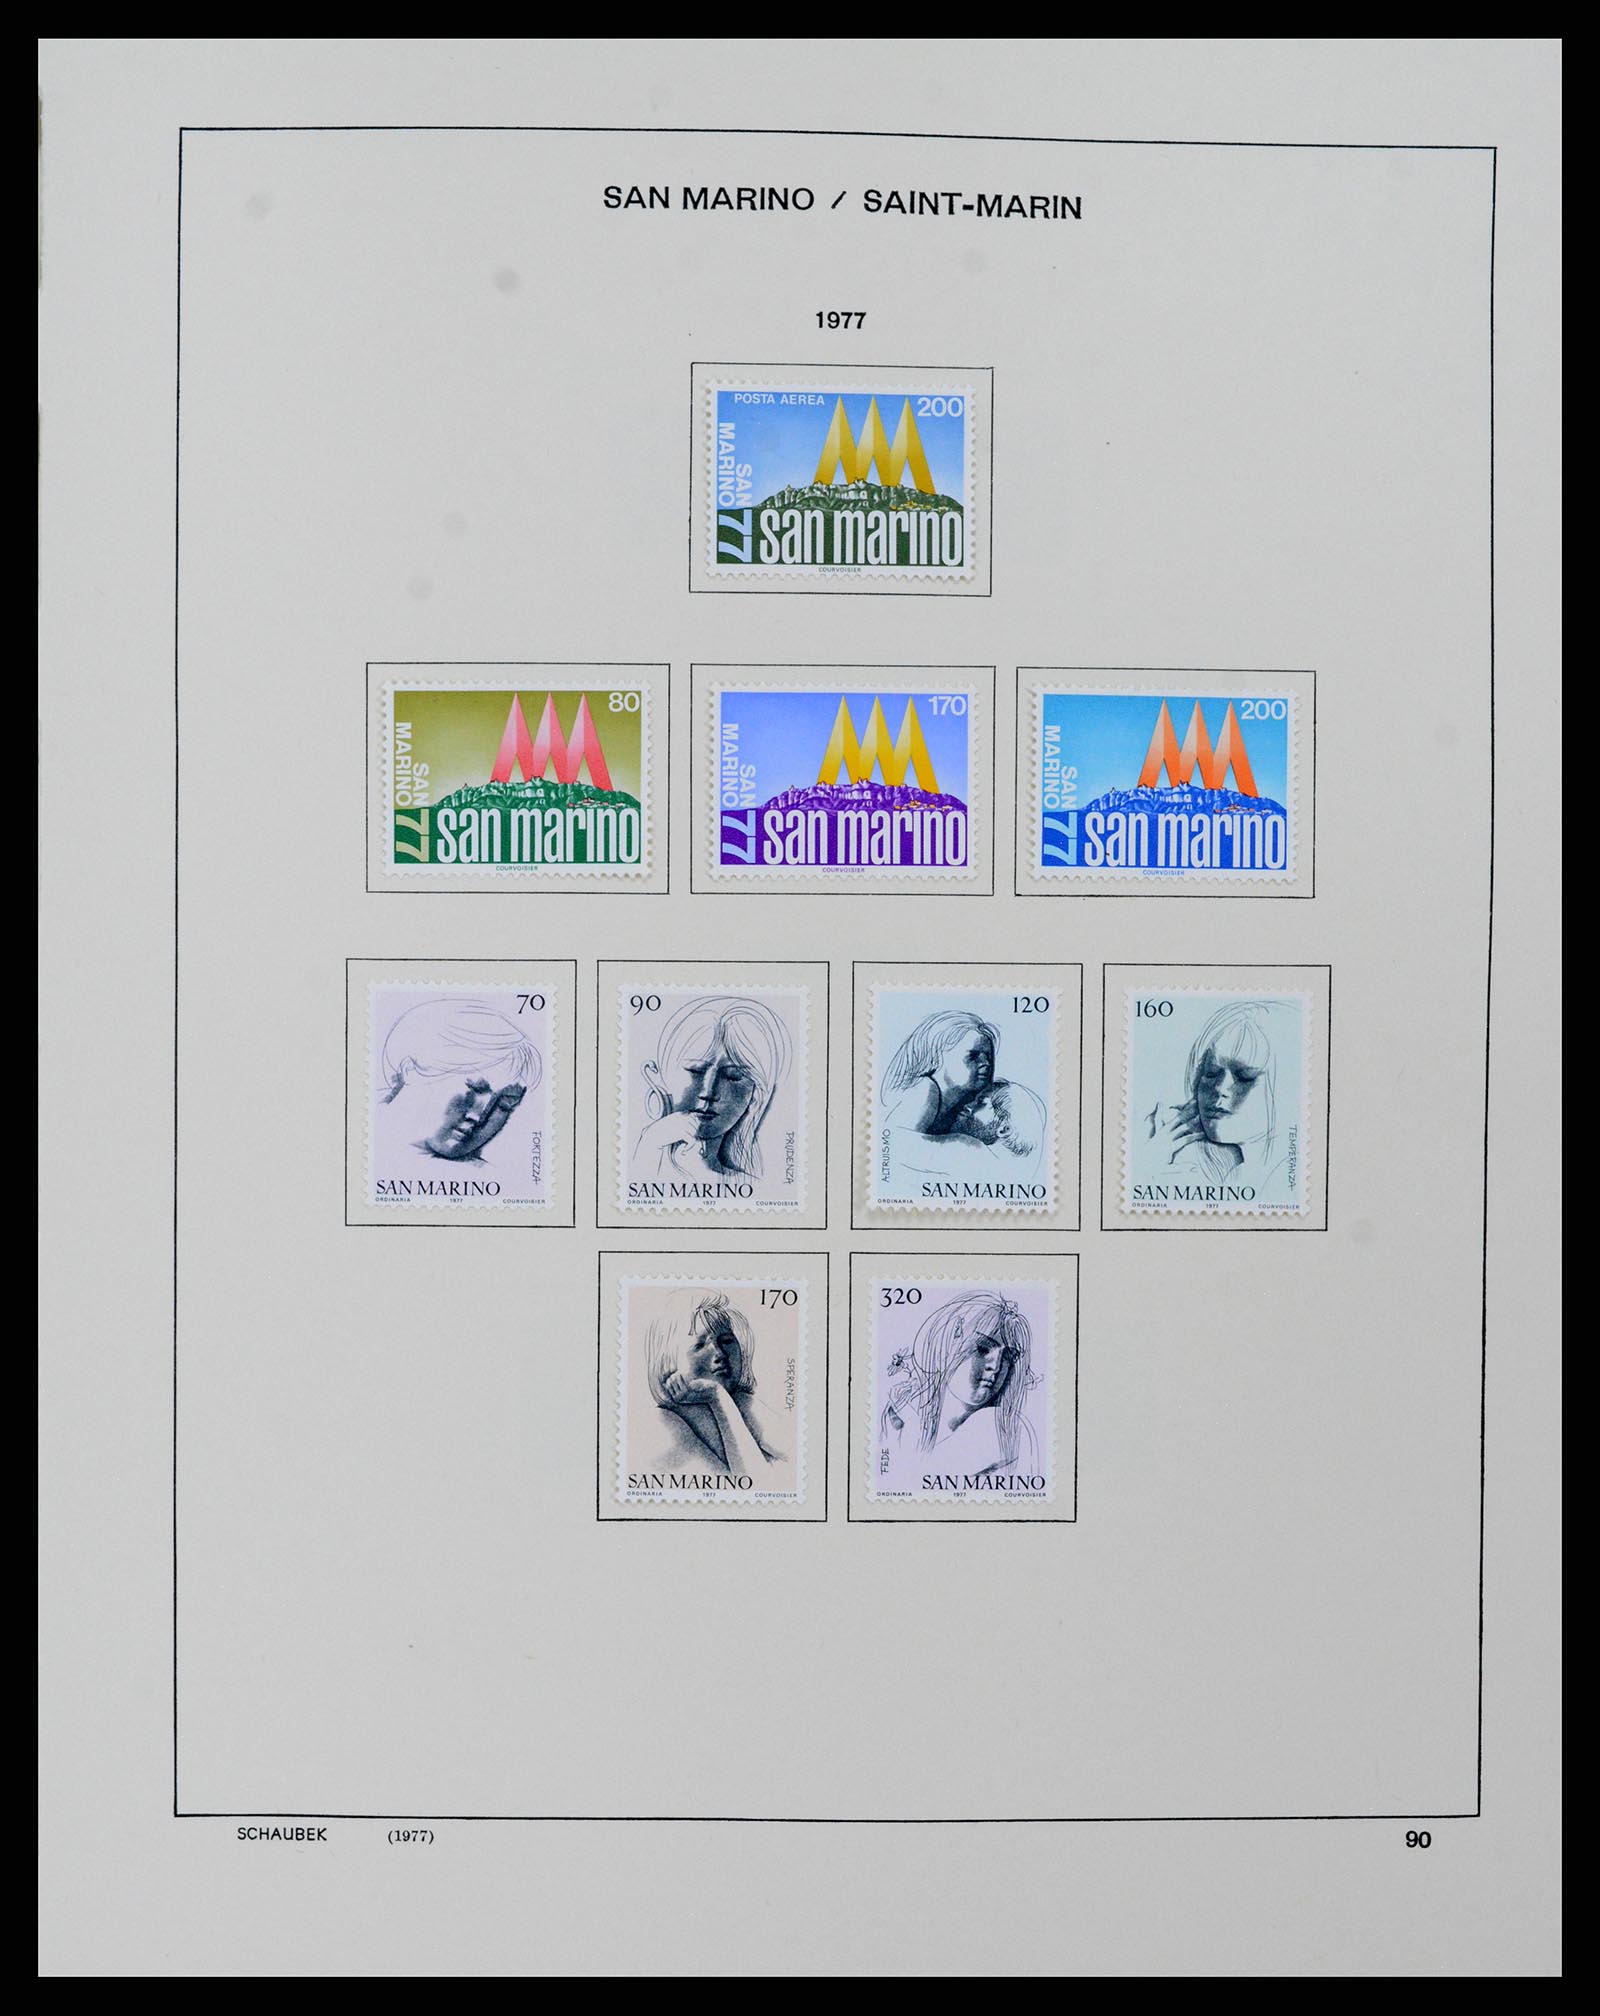 37556 092 - Stamp collection 37556 San Marino 1877-2017.